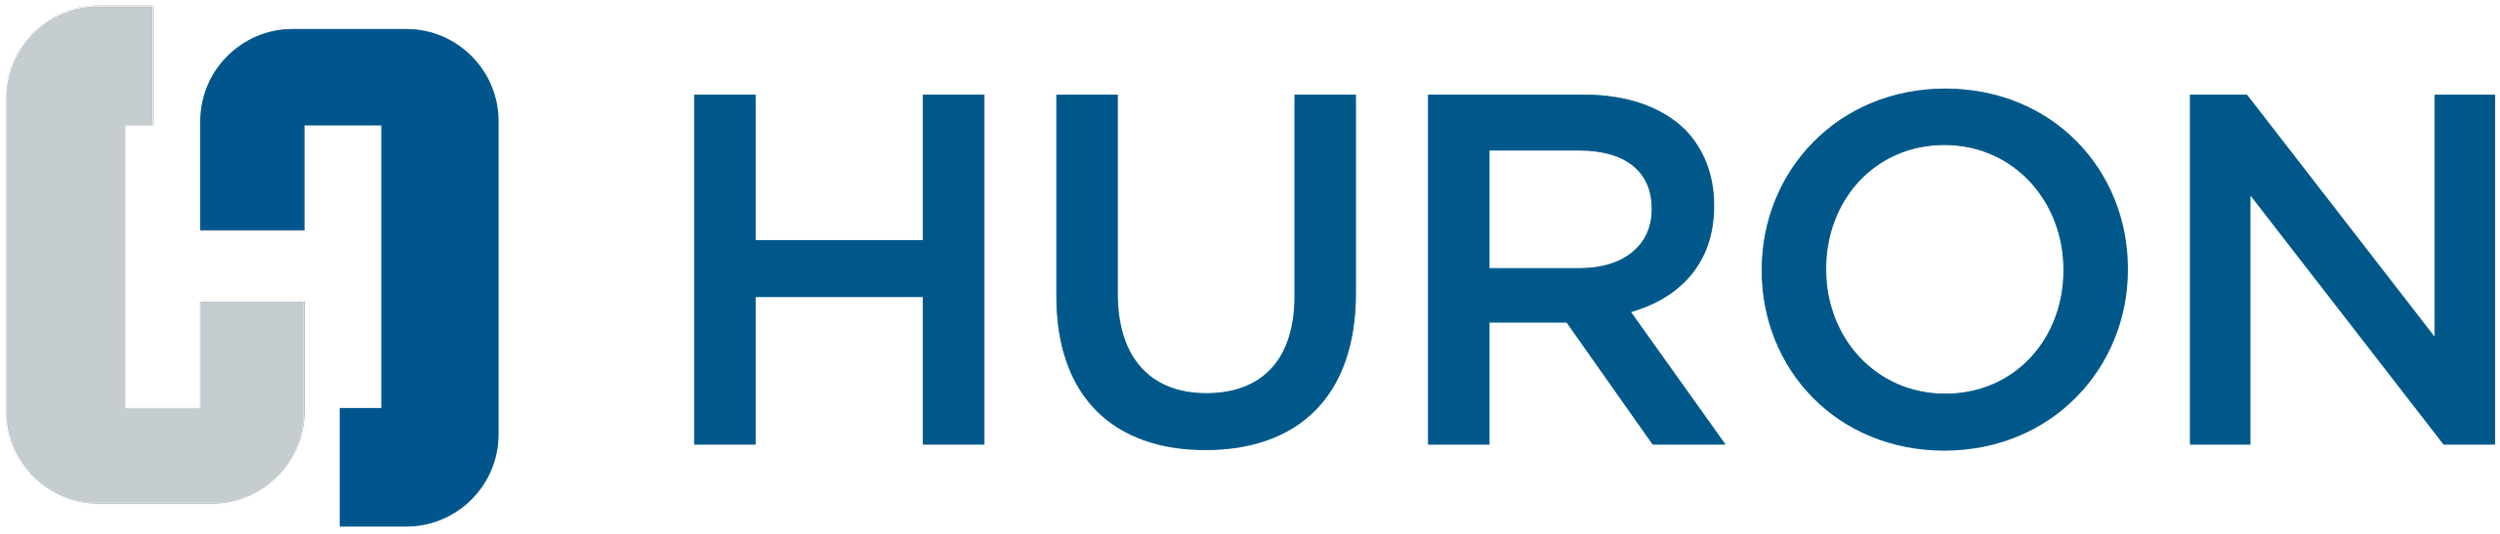 Huron company logo